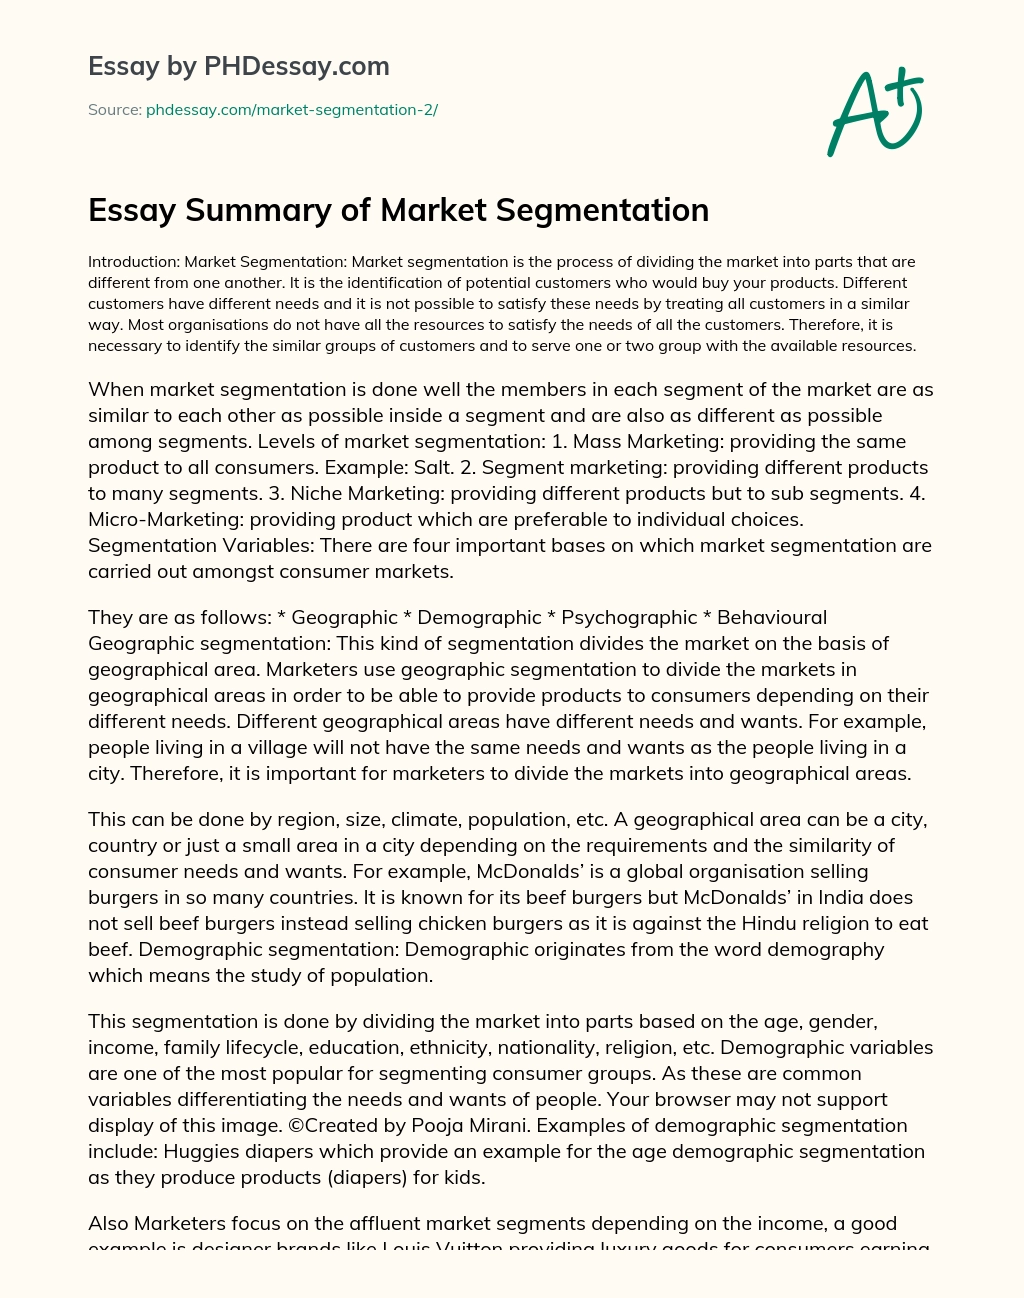 Essay Summary of Market Segmentation essay